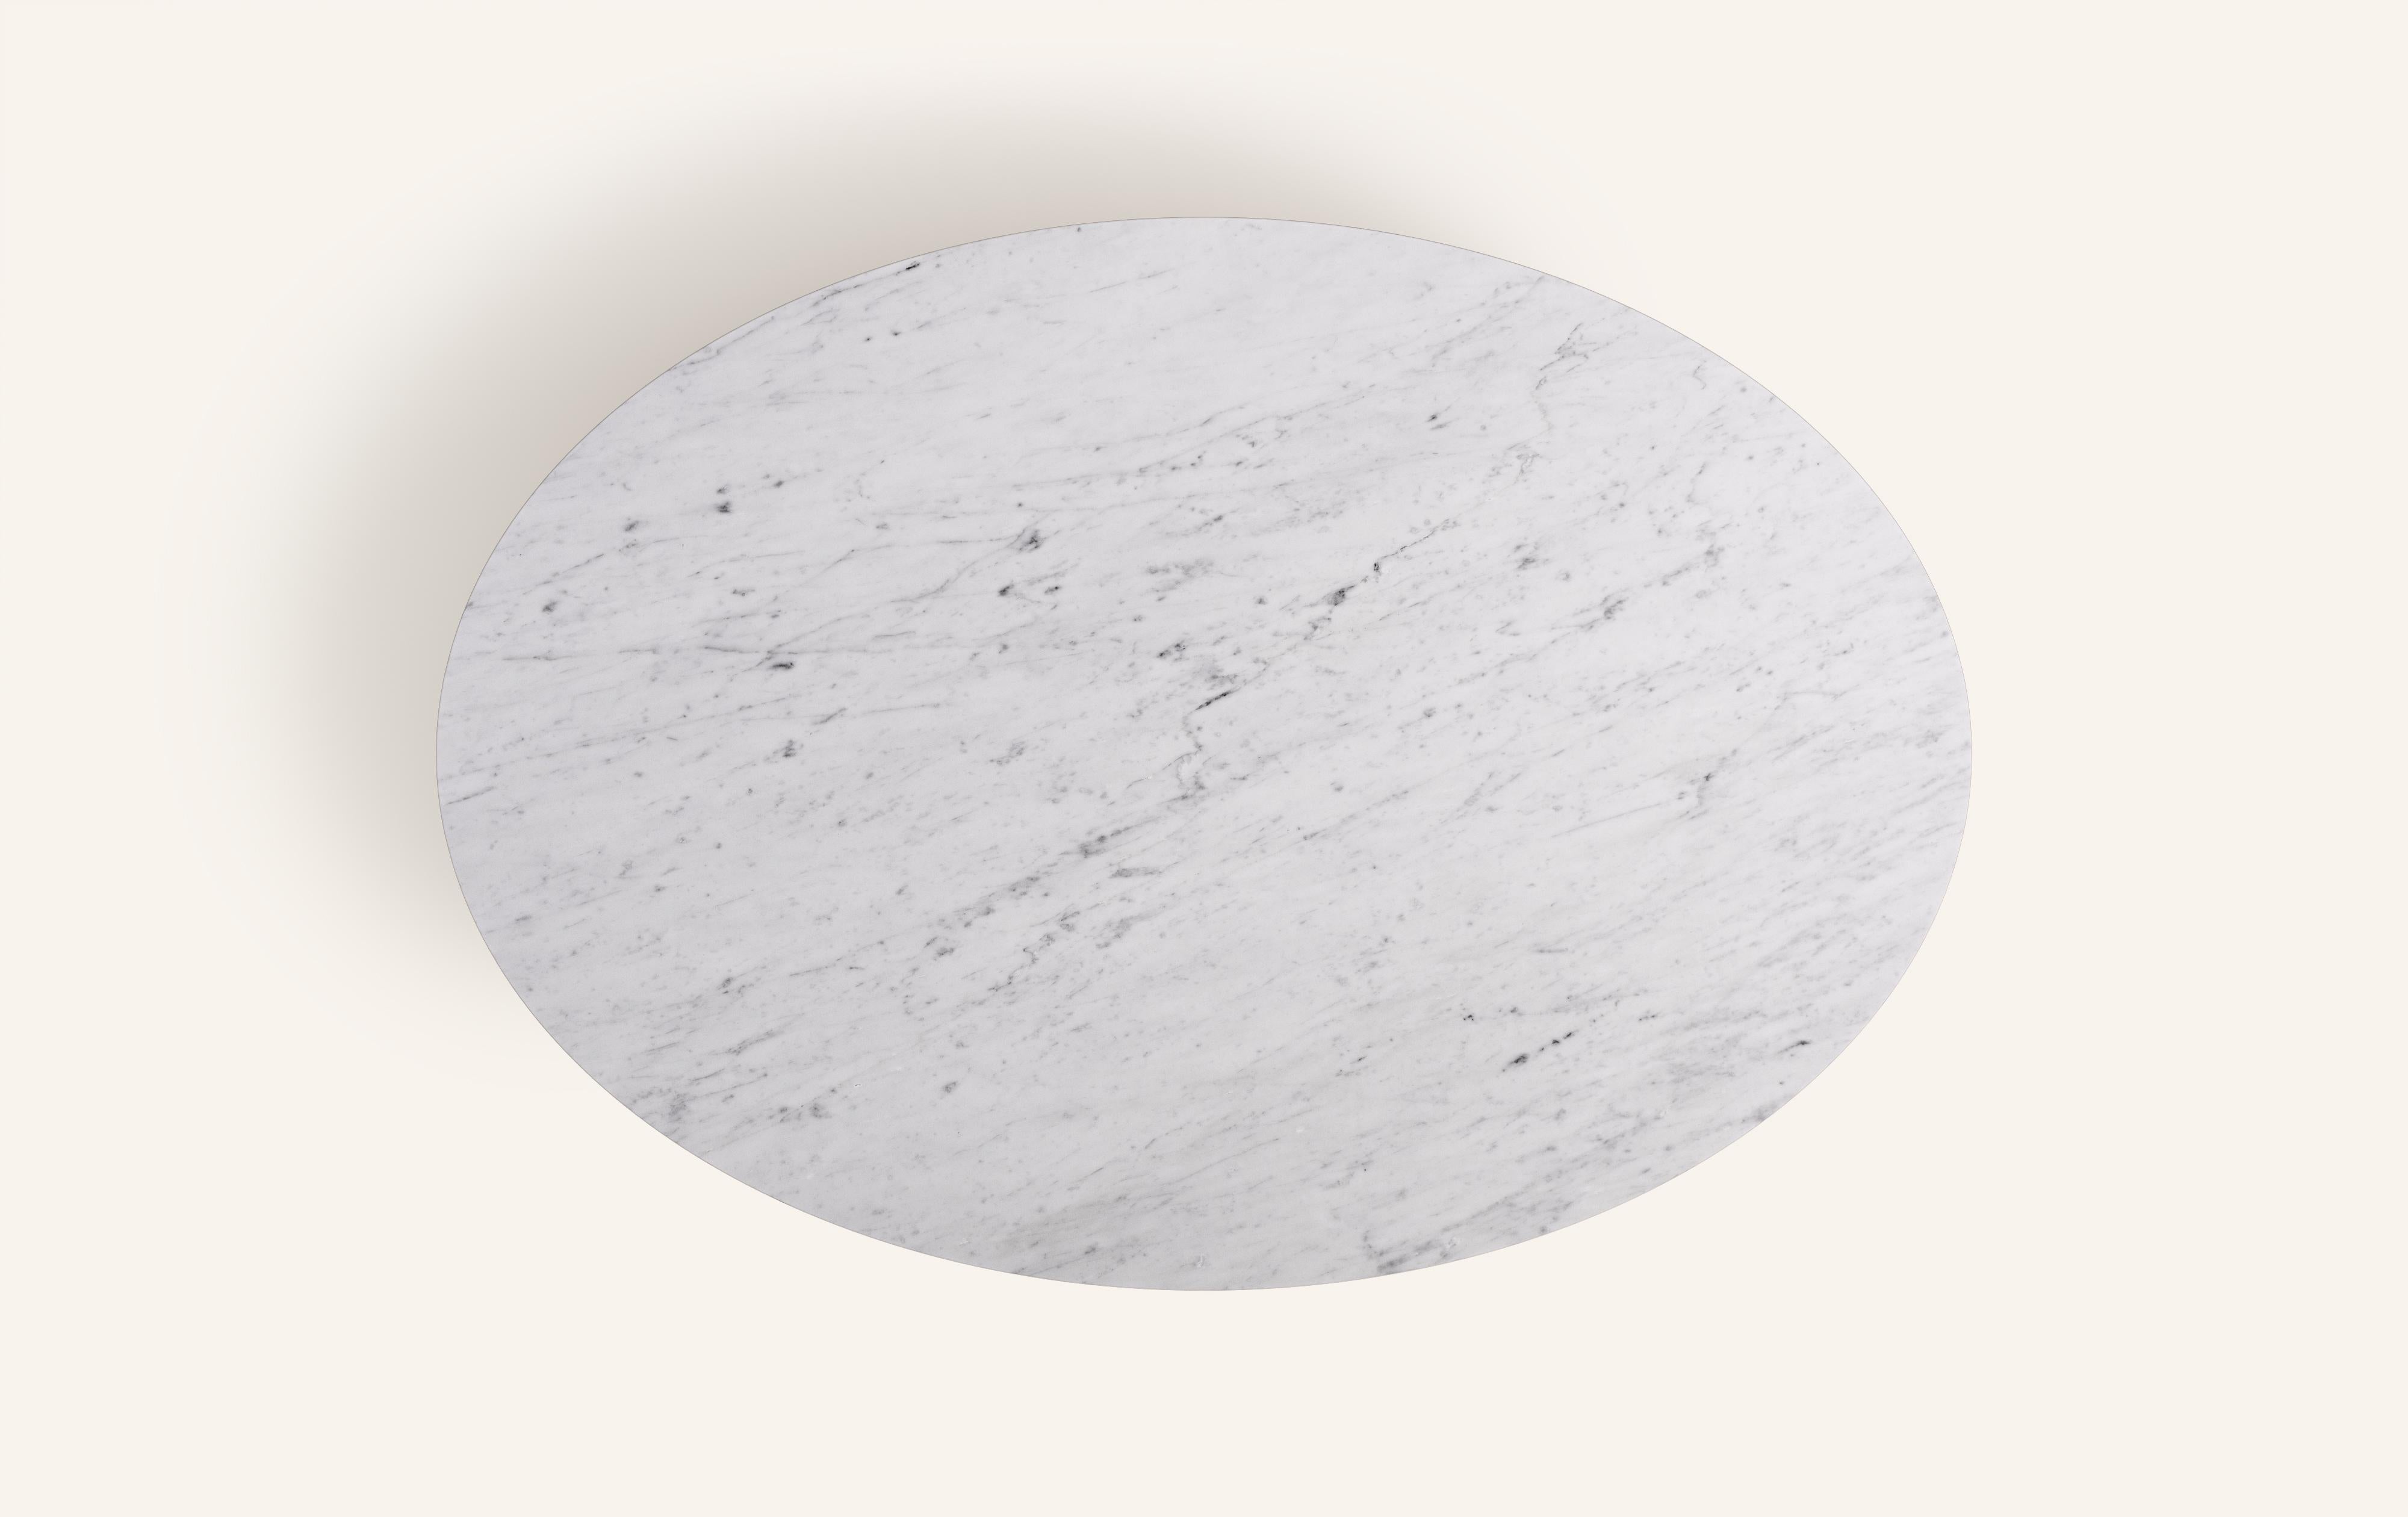 FORM(LA) Sfera Oval Coffee Table 48”L x 36”W x 16”H Carrara Bianco Marble In New Condition For Sale In Los Angeles, CA